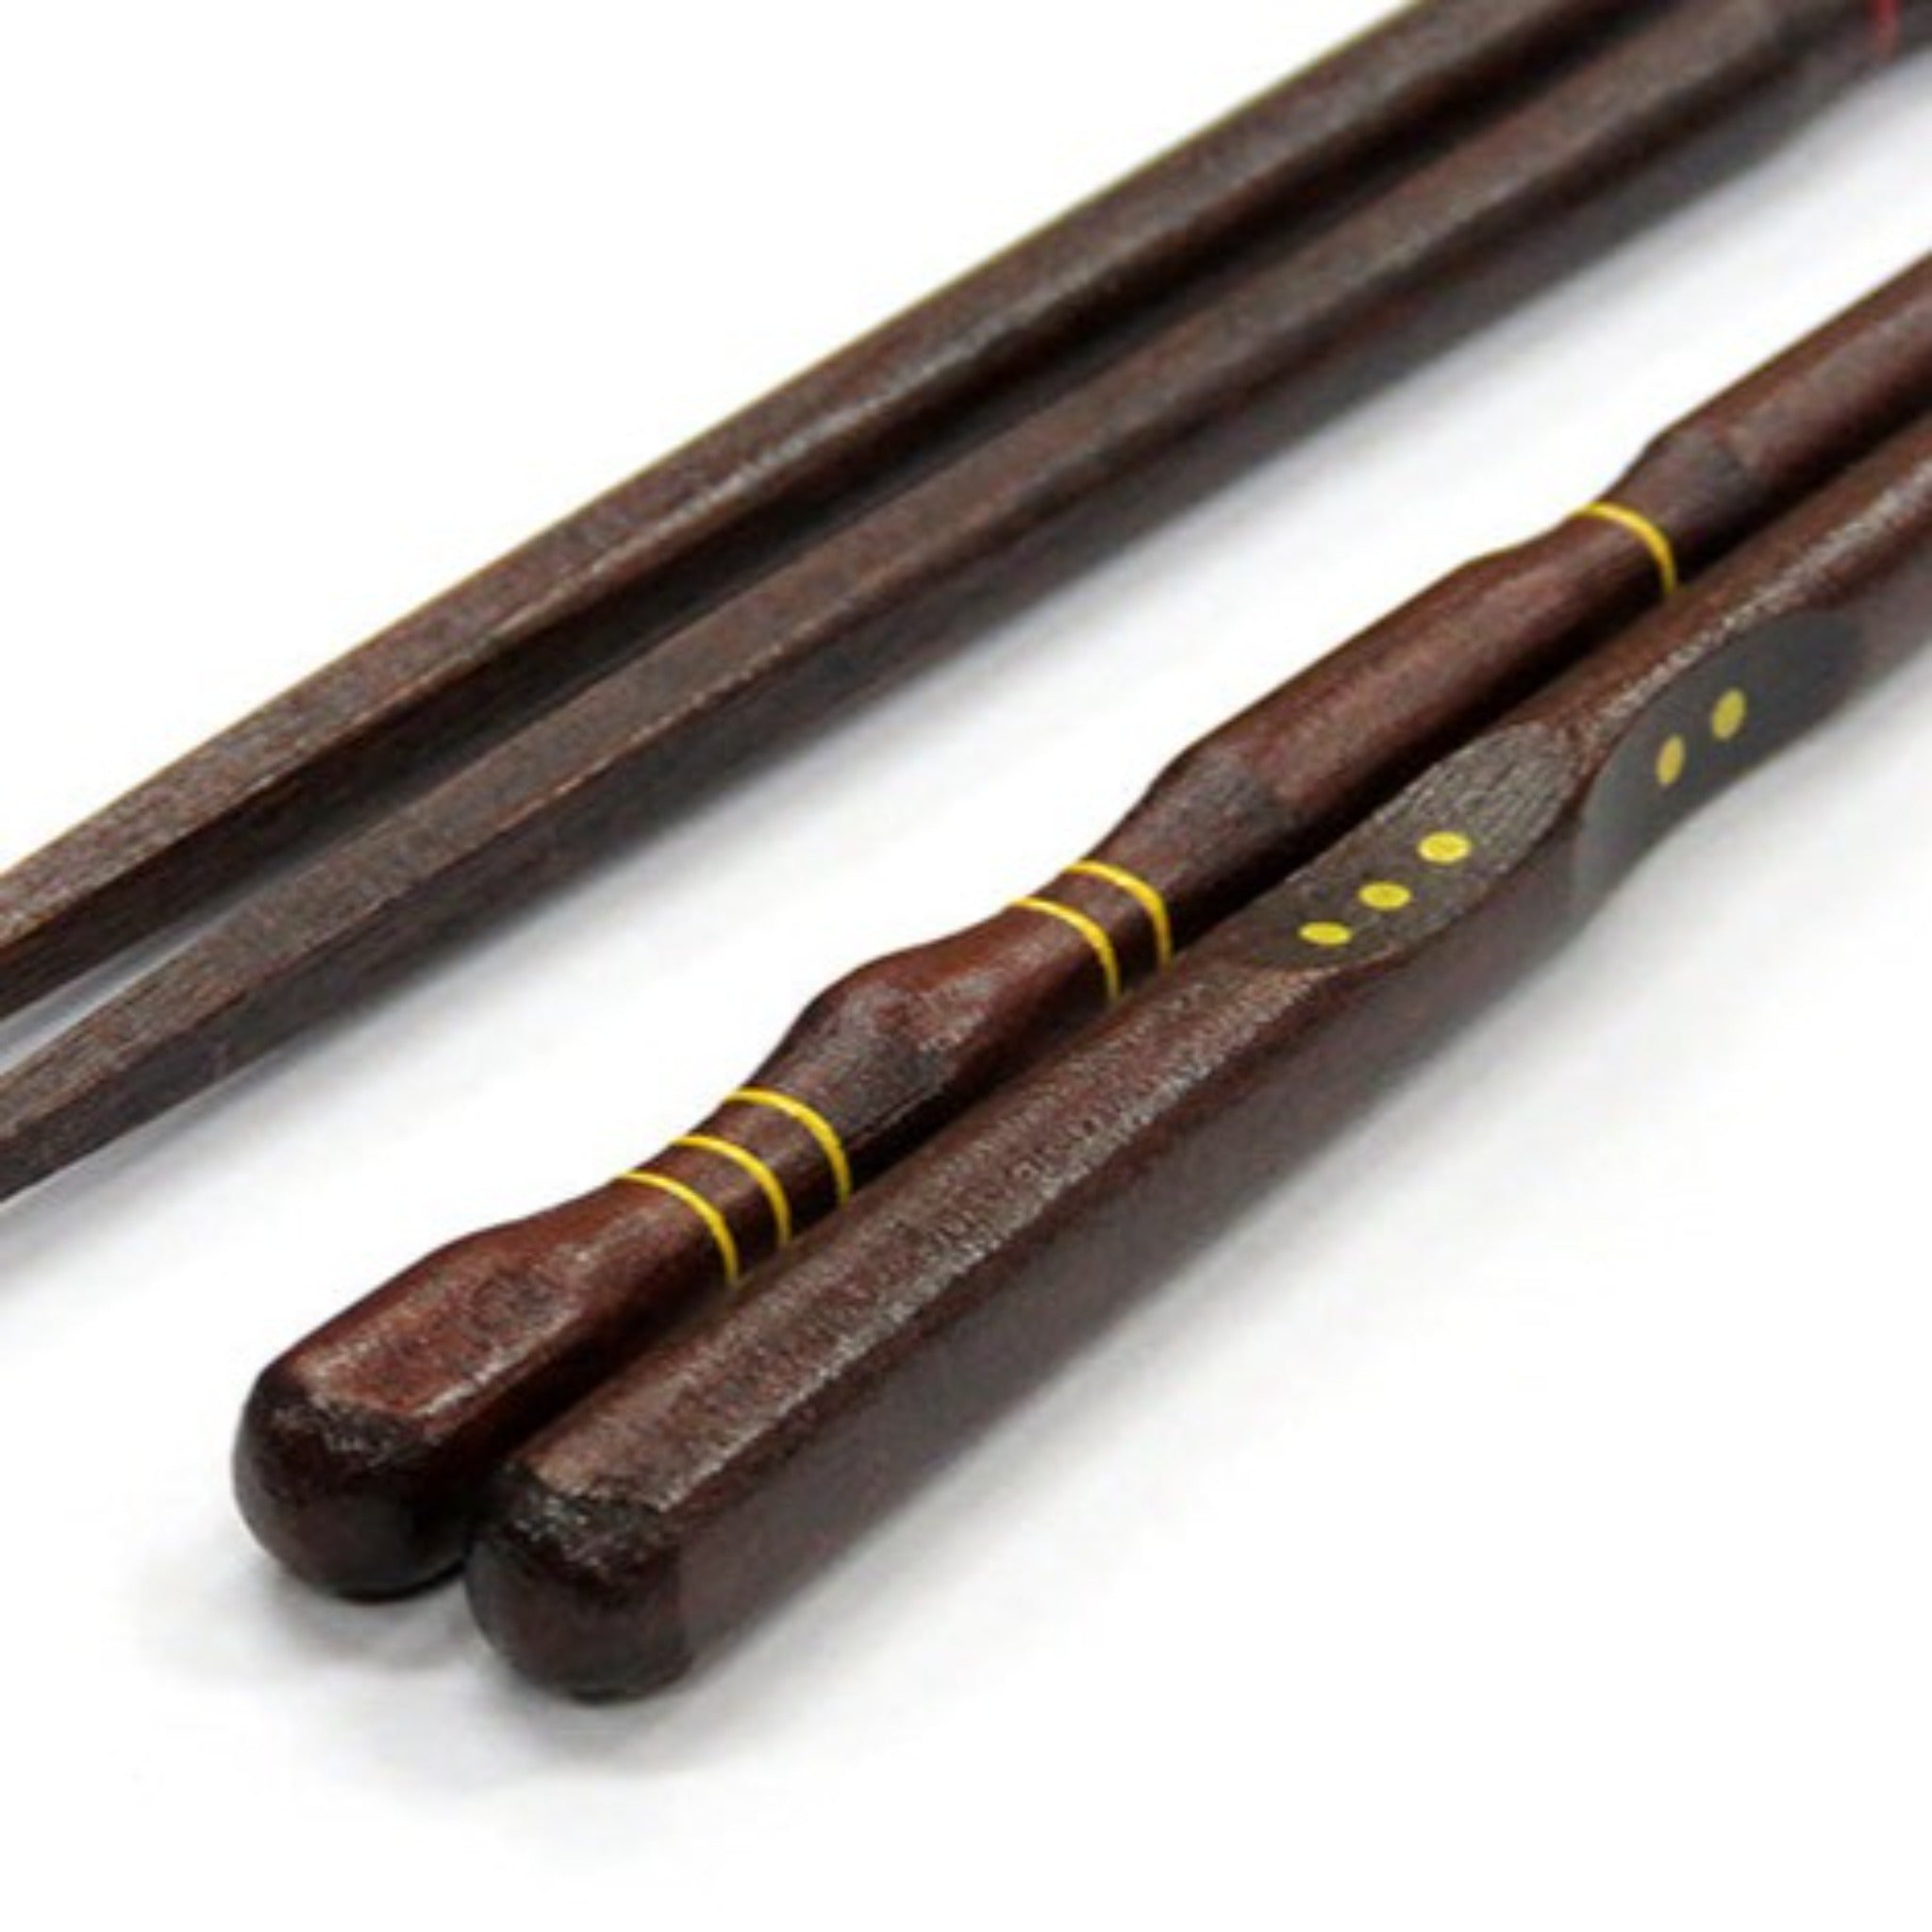 Fruit Tree Wood Chopsticks - three types of wood